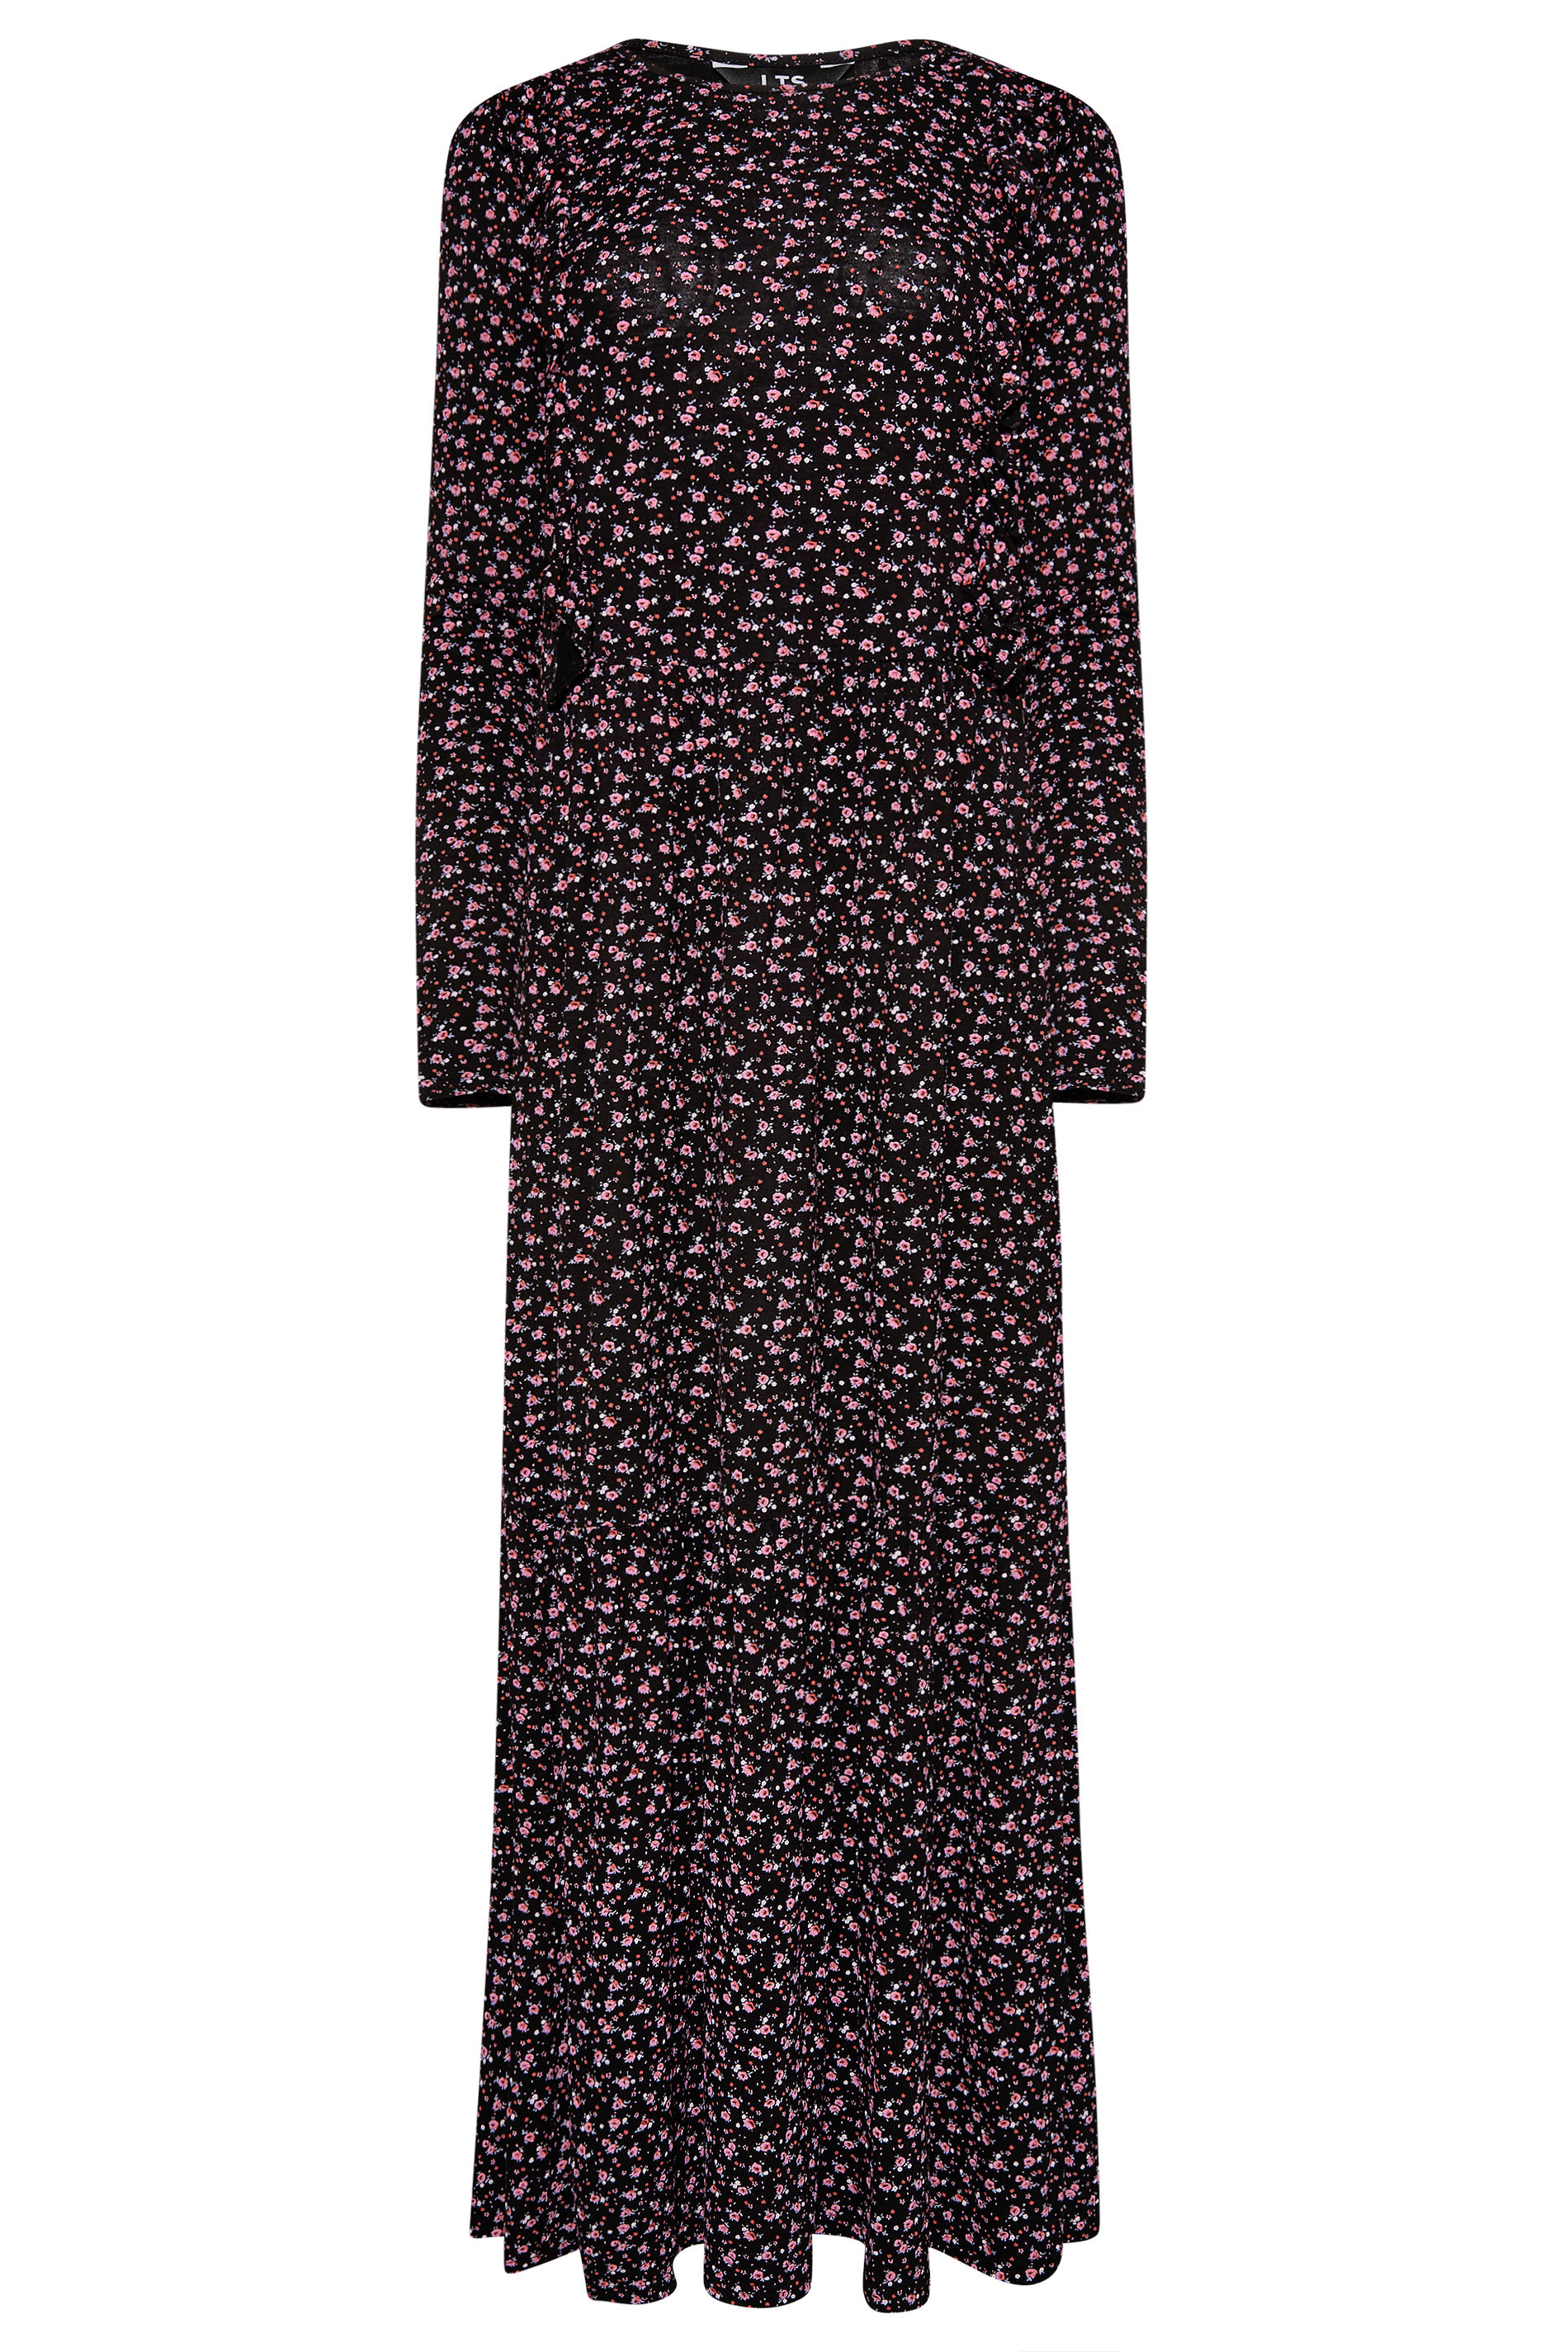 Tall Women's LTS Black Ditsy Floral Ruffle Midi Dress | Long Tall Sally 2